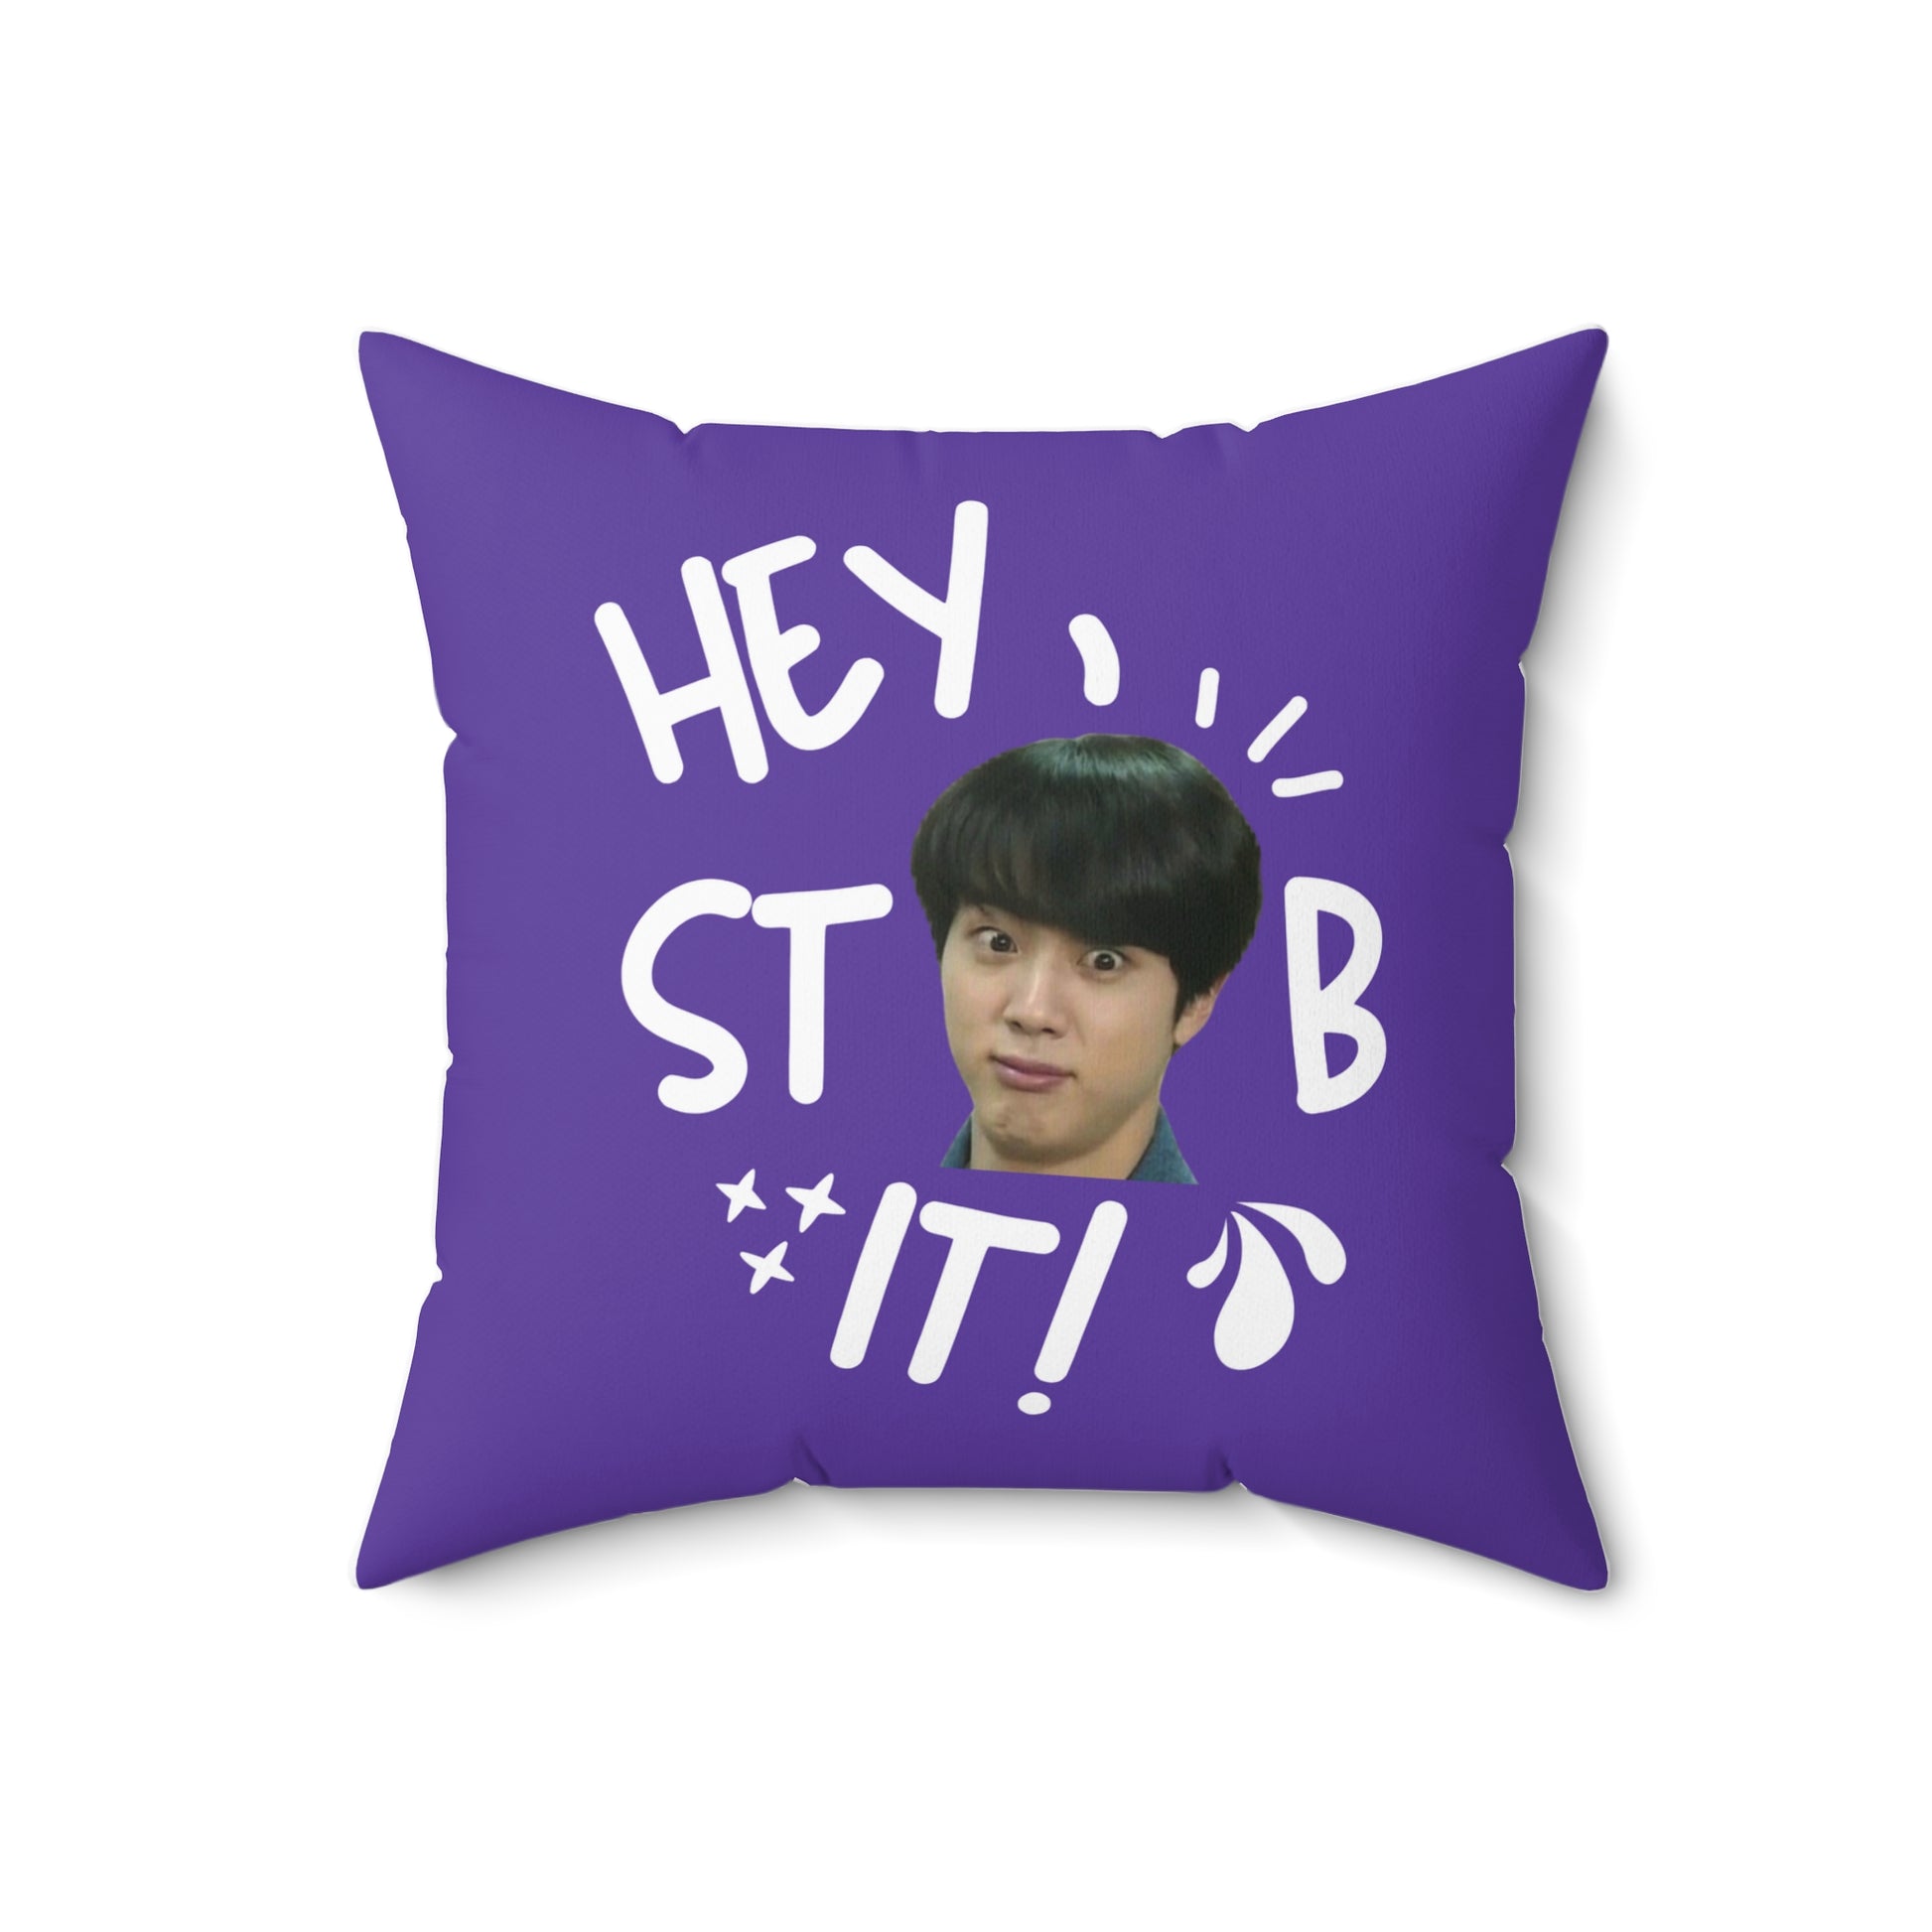 Hey Stob It meme throw pillow - Kpop gift